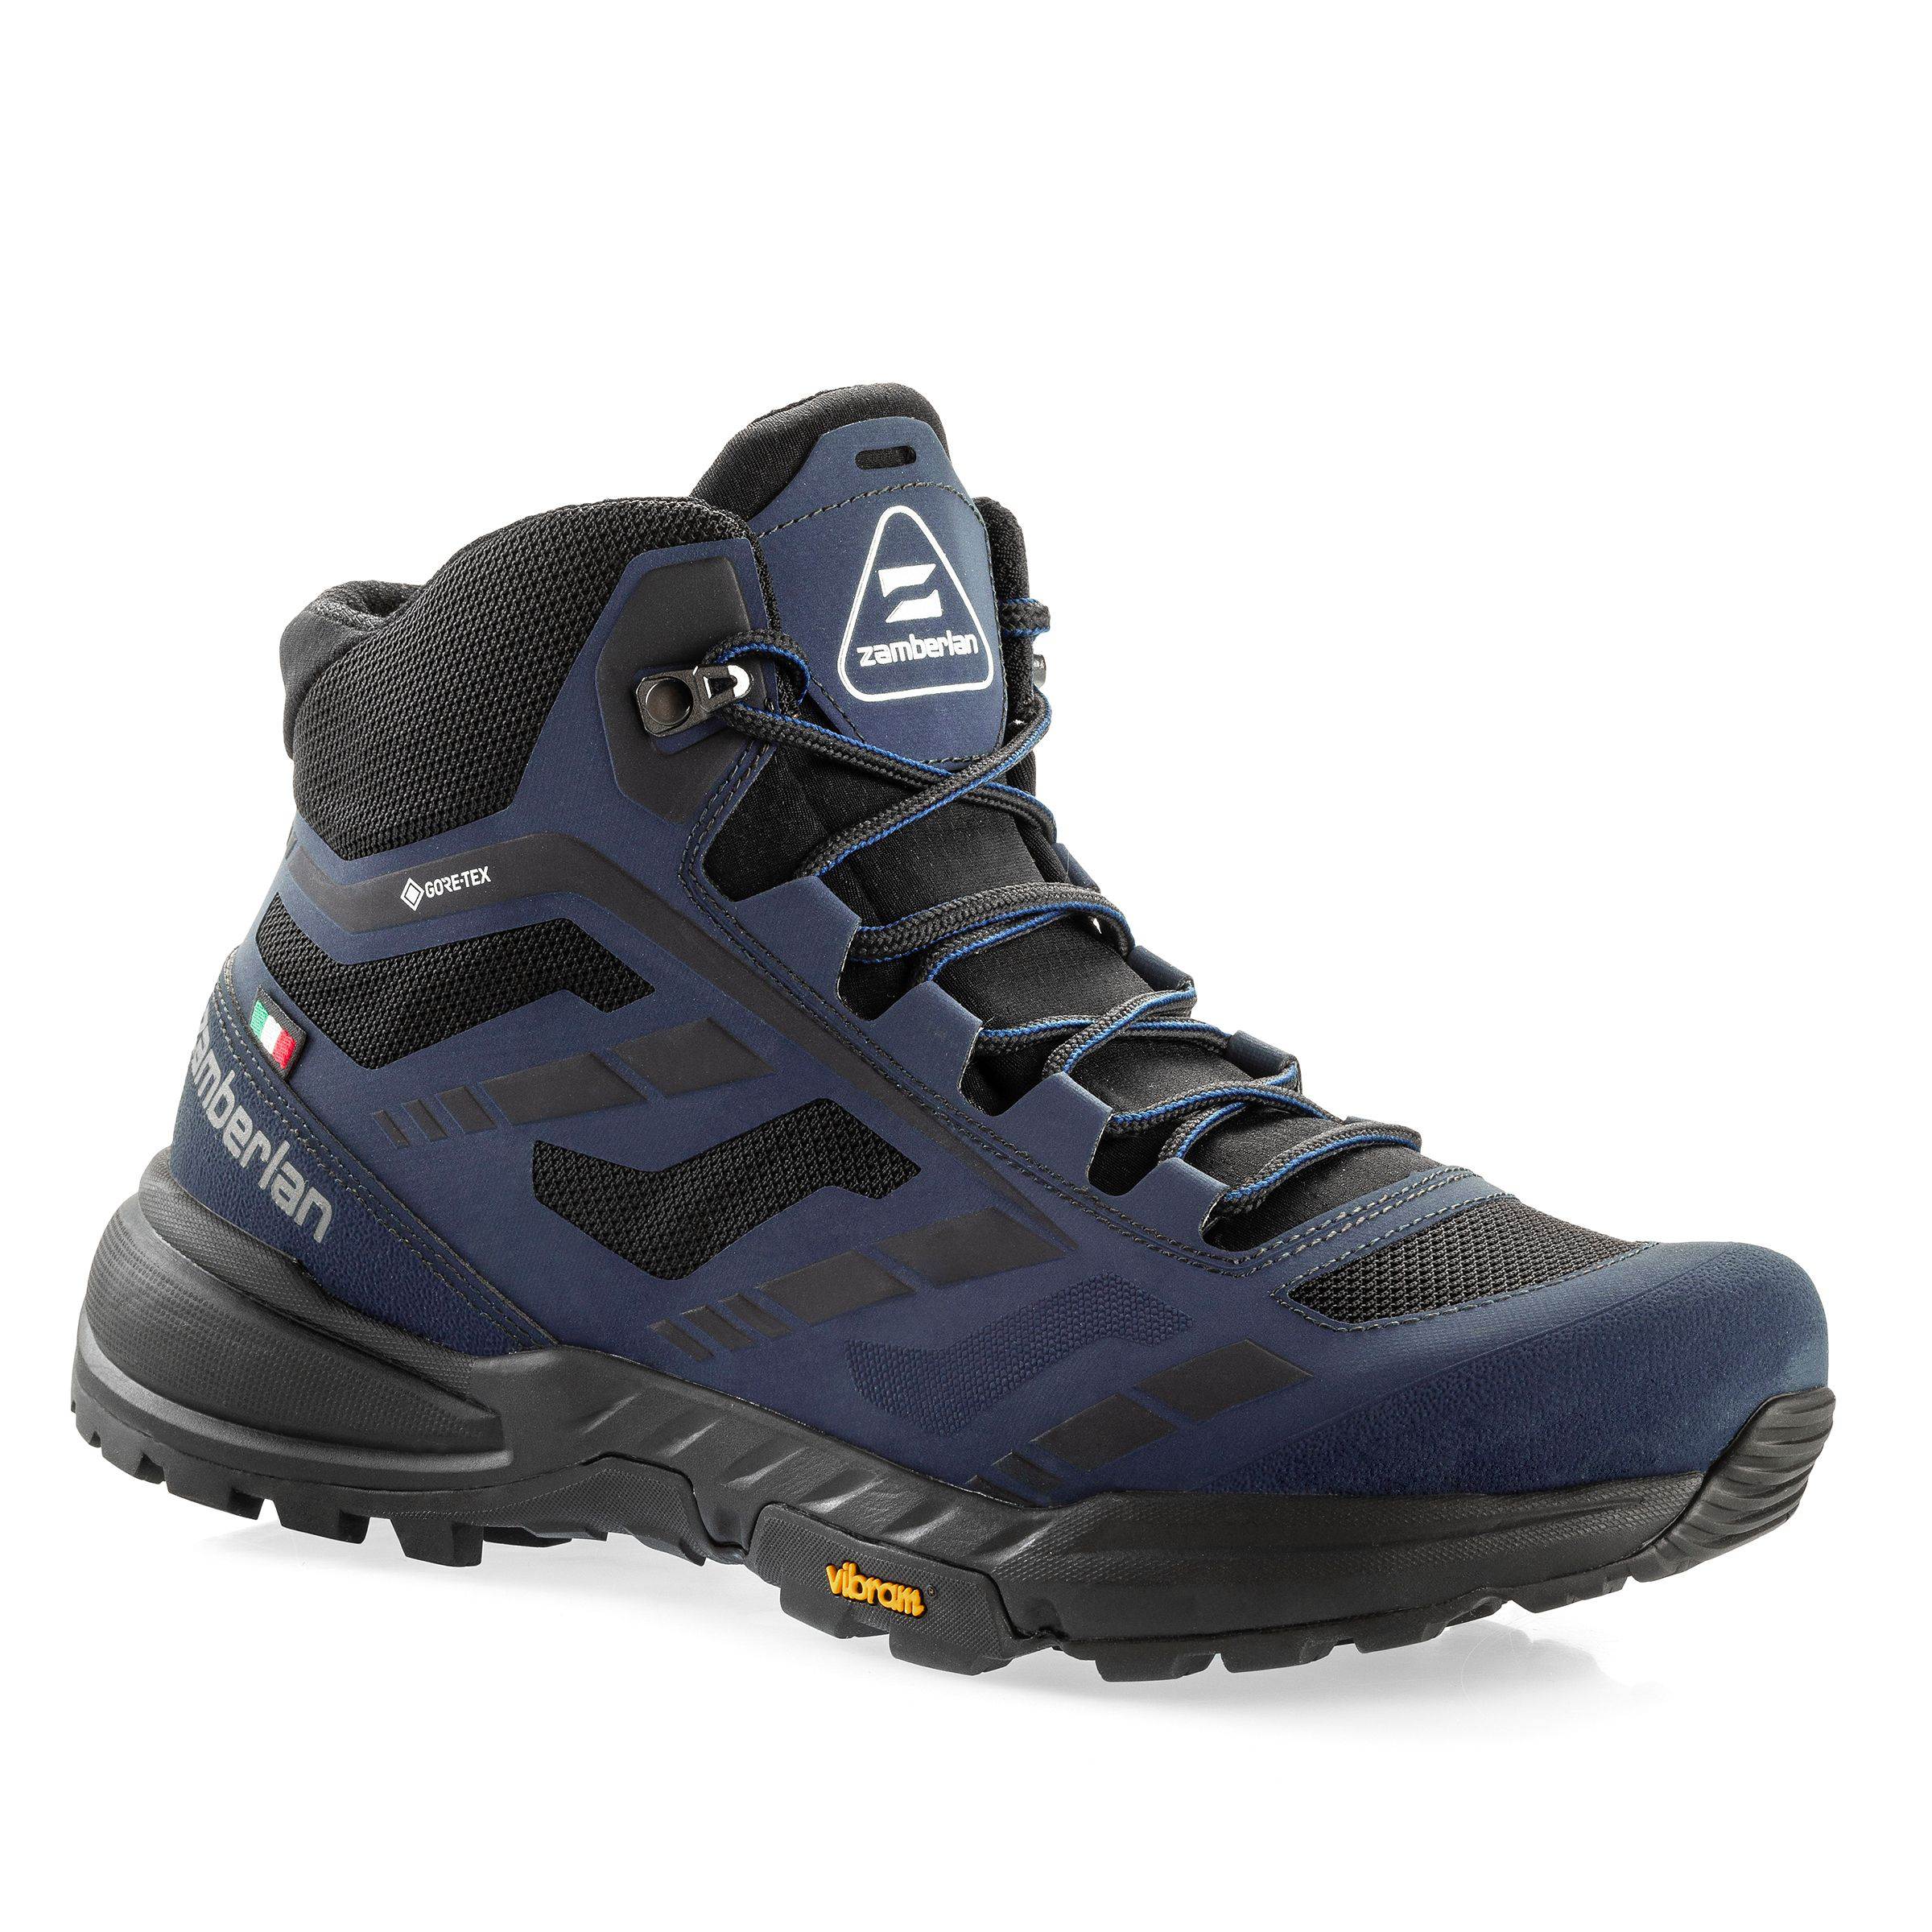 Zamberlan 219 Anabasis GTX Waterproof Mid Hiking Boots for Men - Blue - 9.5M